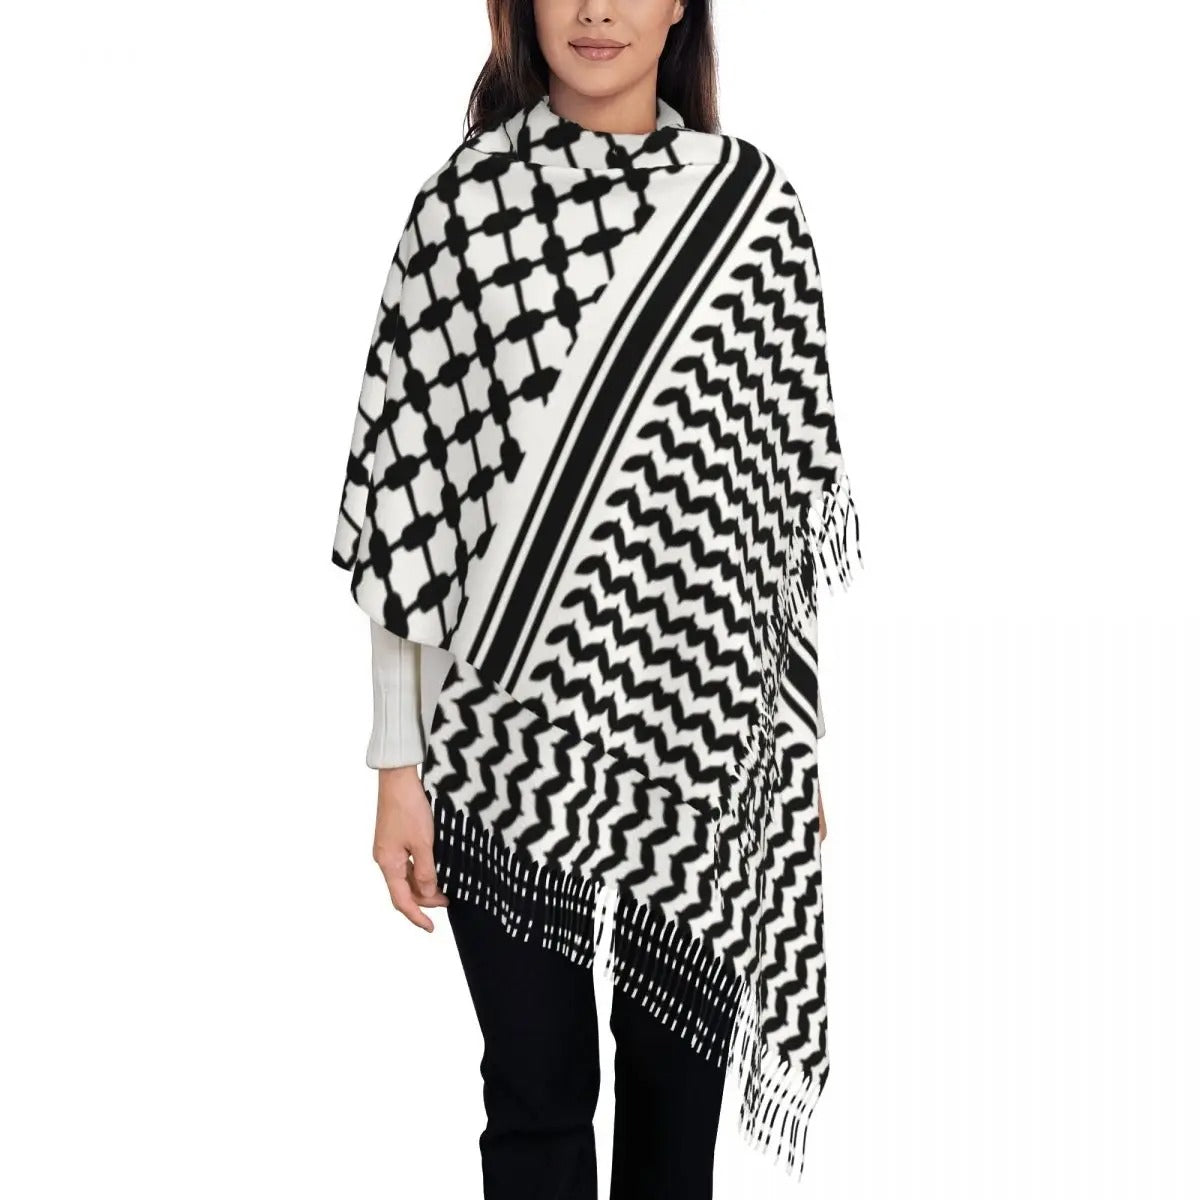 Kuffiya Shawl Wrap (Multiple Styles Available) - Project Palestine